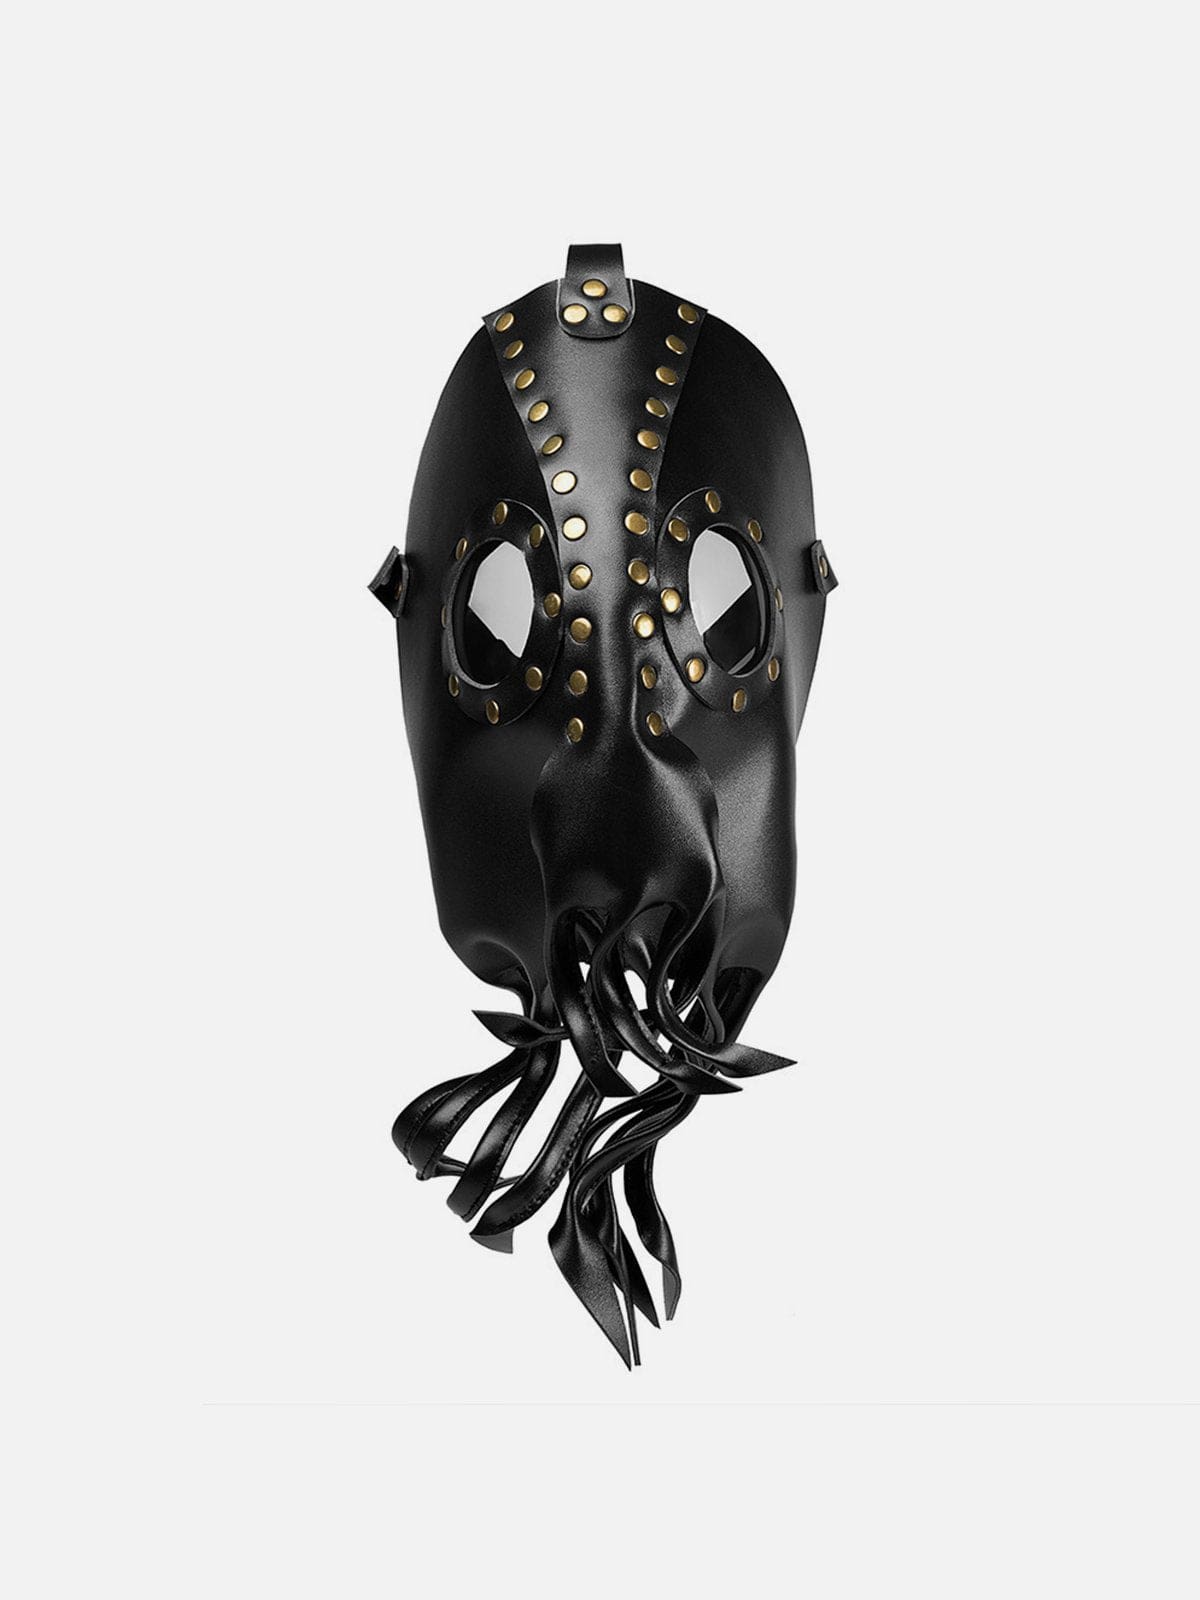 NEV Octopus Devil Mask